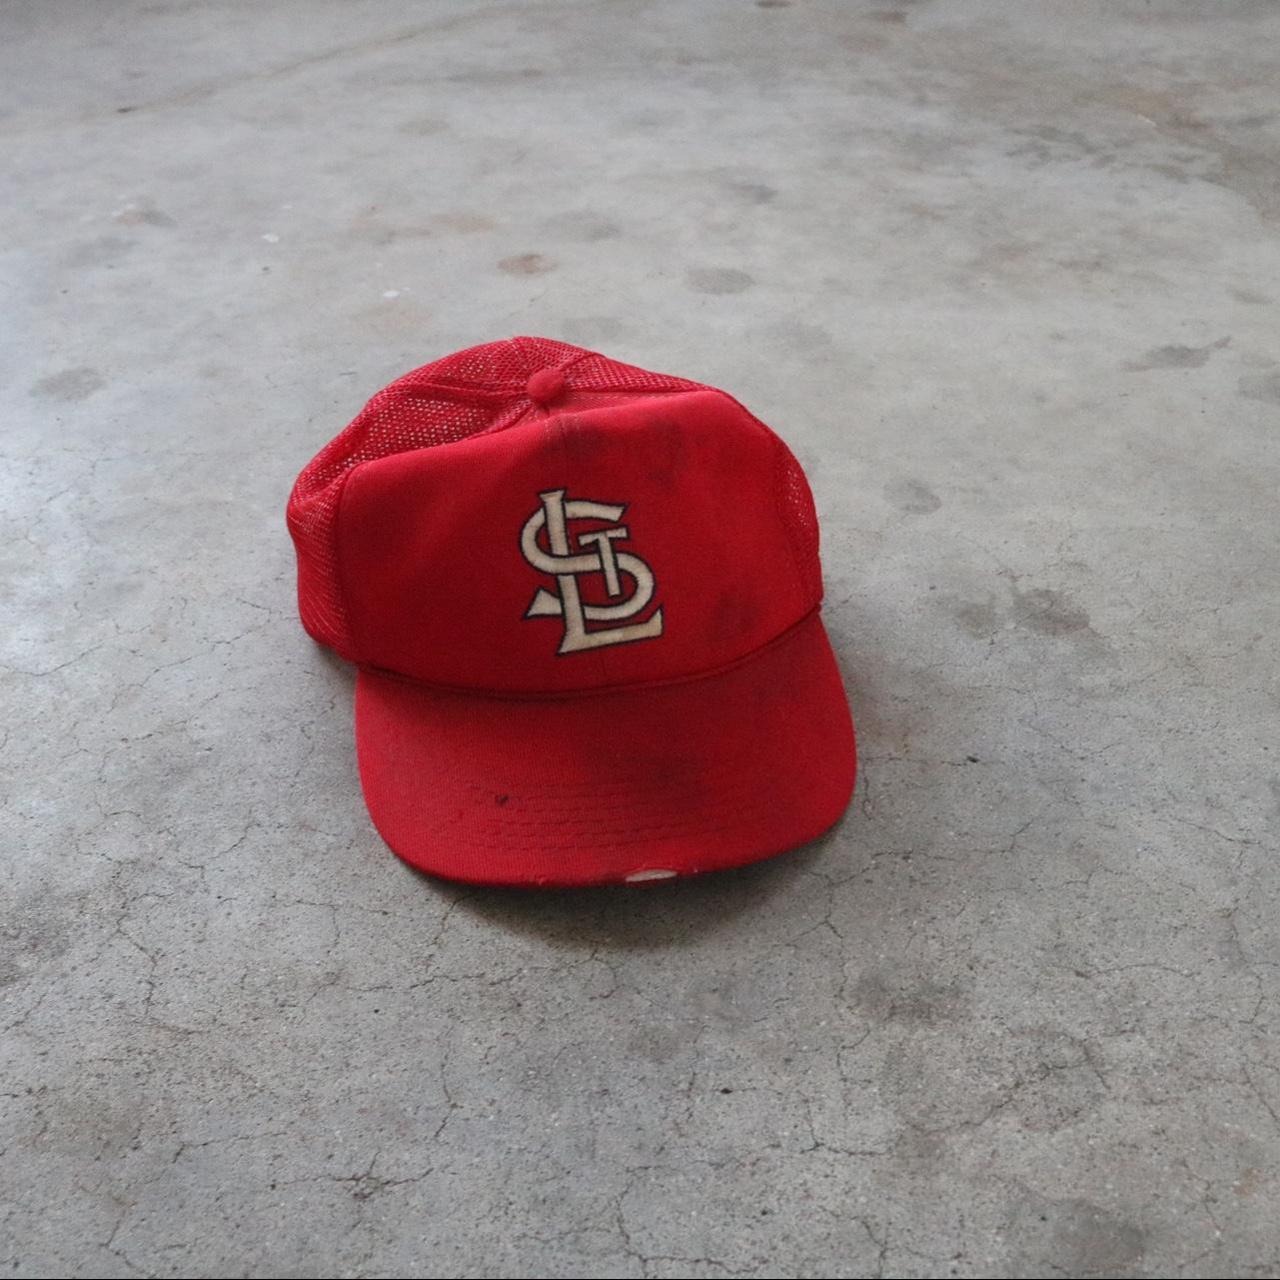 This vintage St. Louis Cardinals hat is in used - Depop